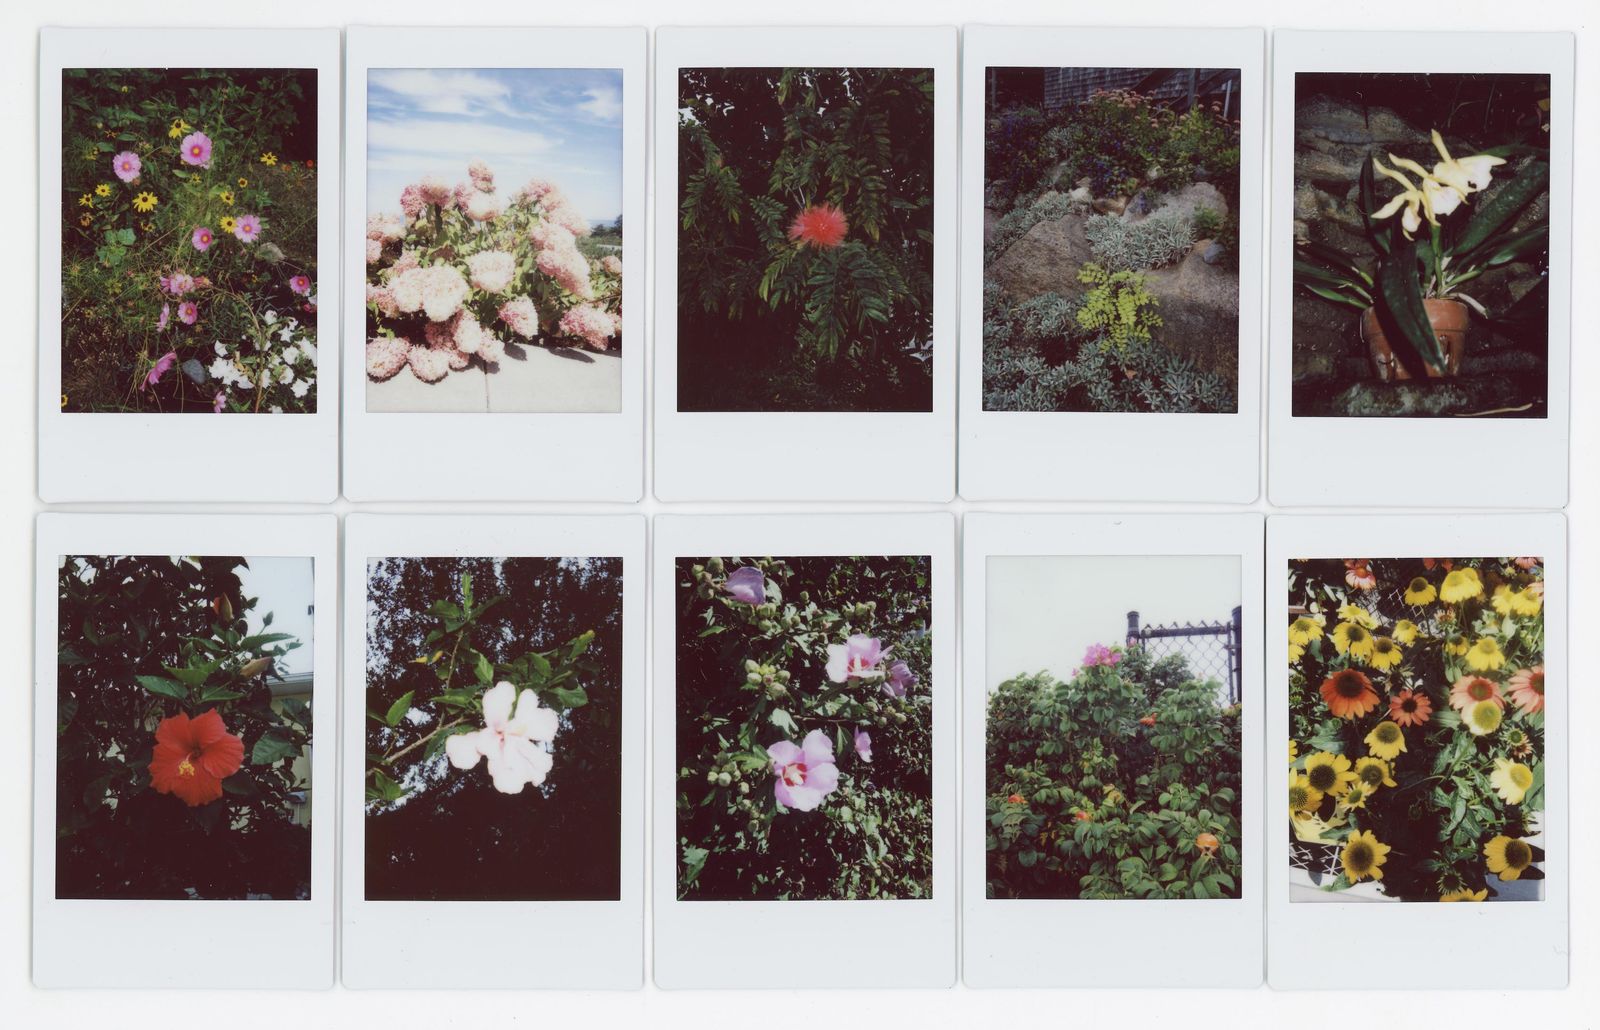 © RACHEL TREIDE - "A Minute Fraction of All the Flowers I've Ever Seen," photographs 61-70